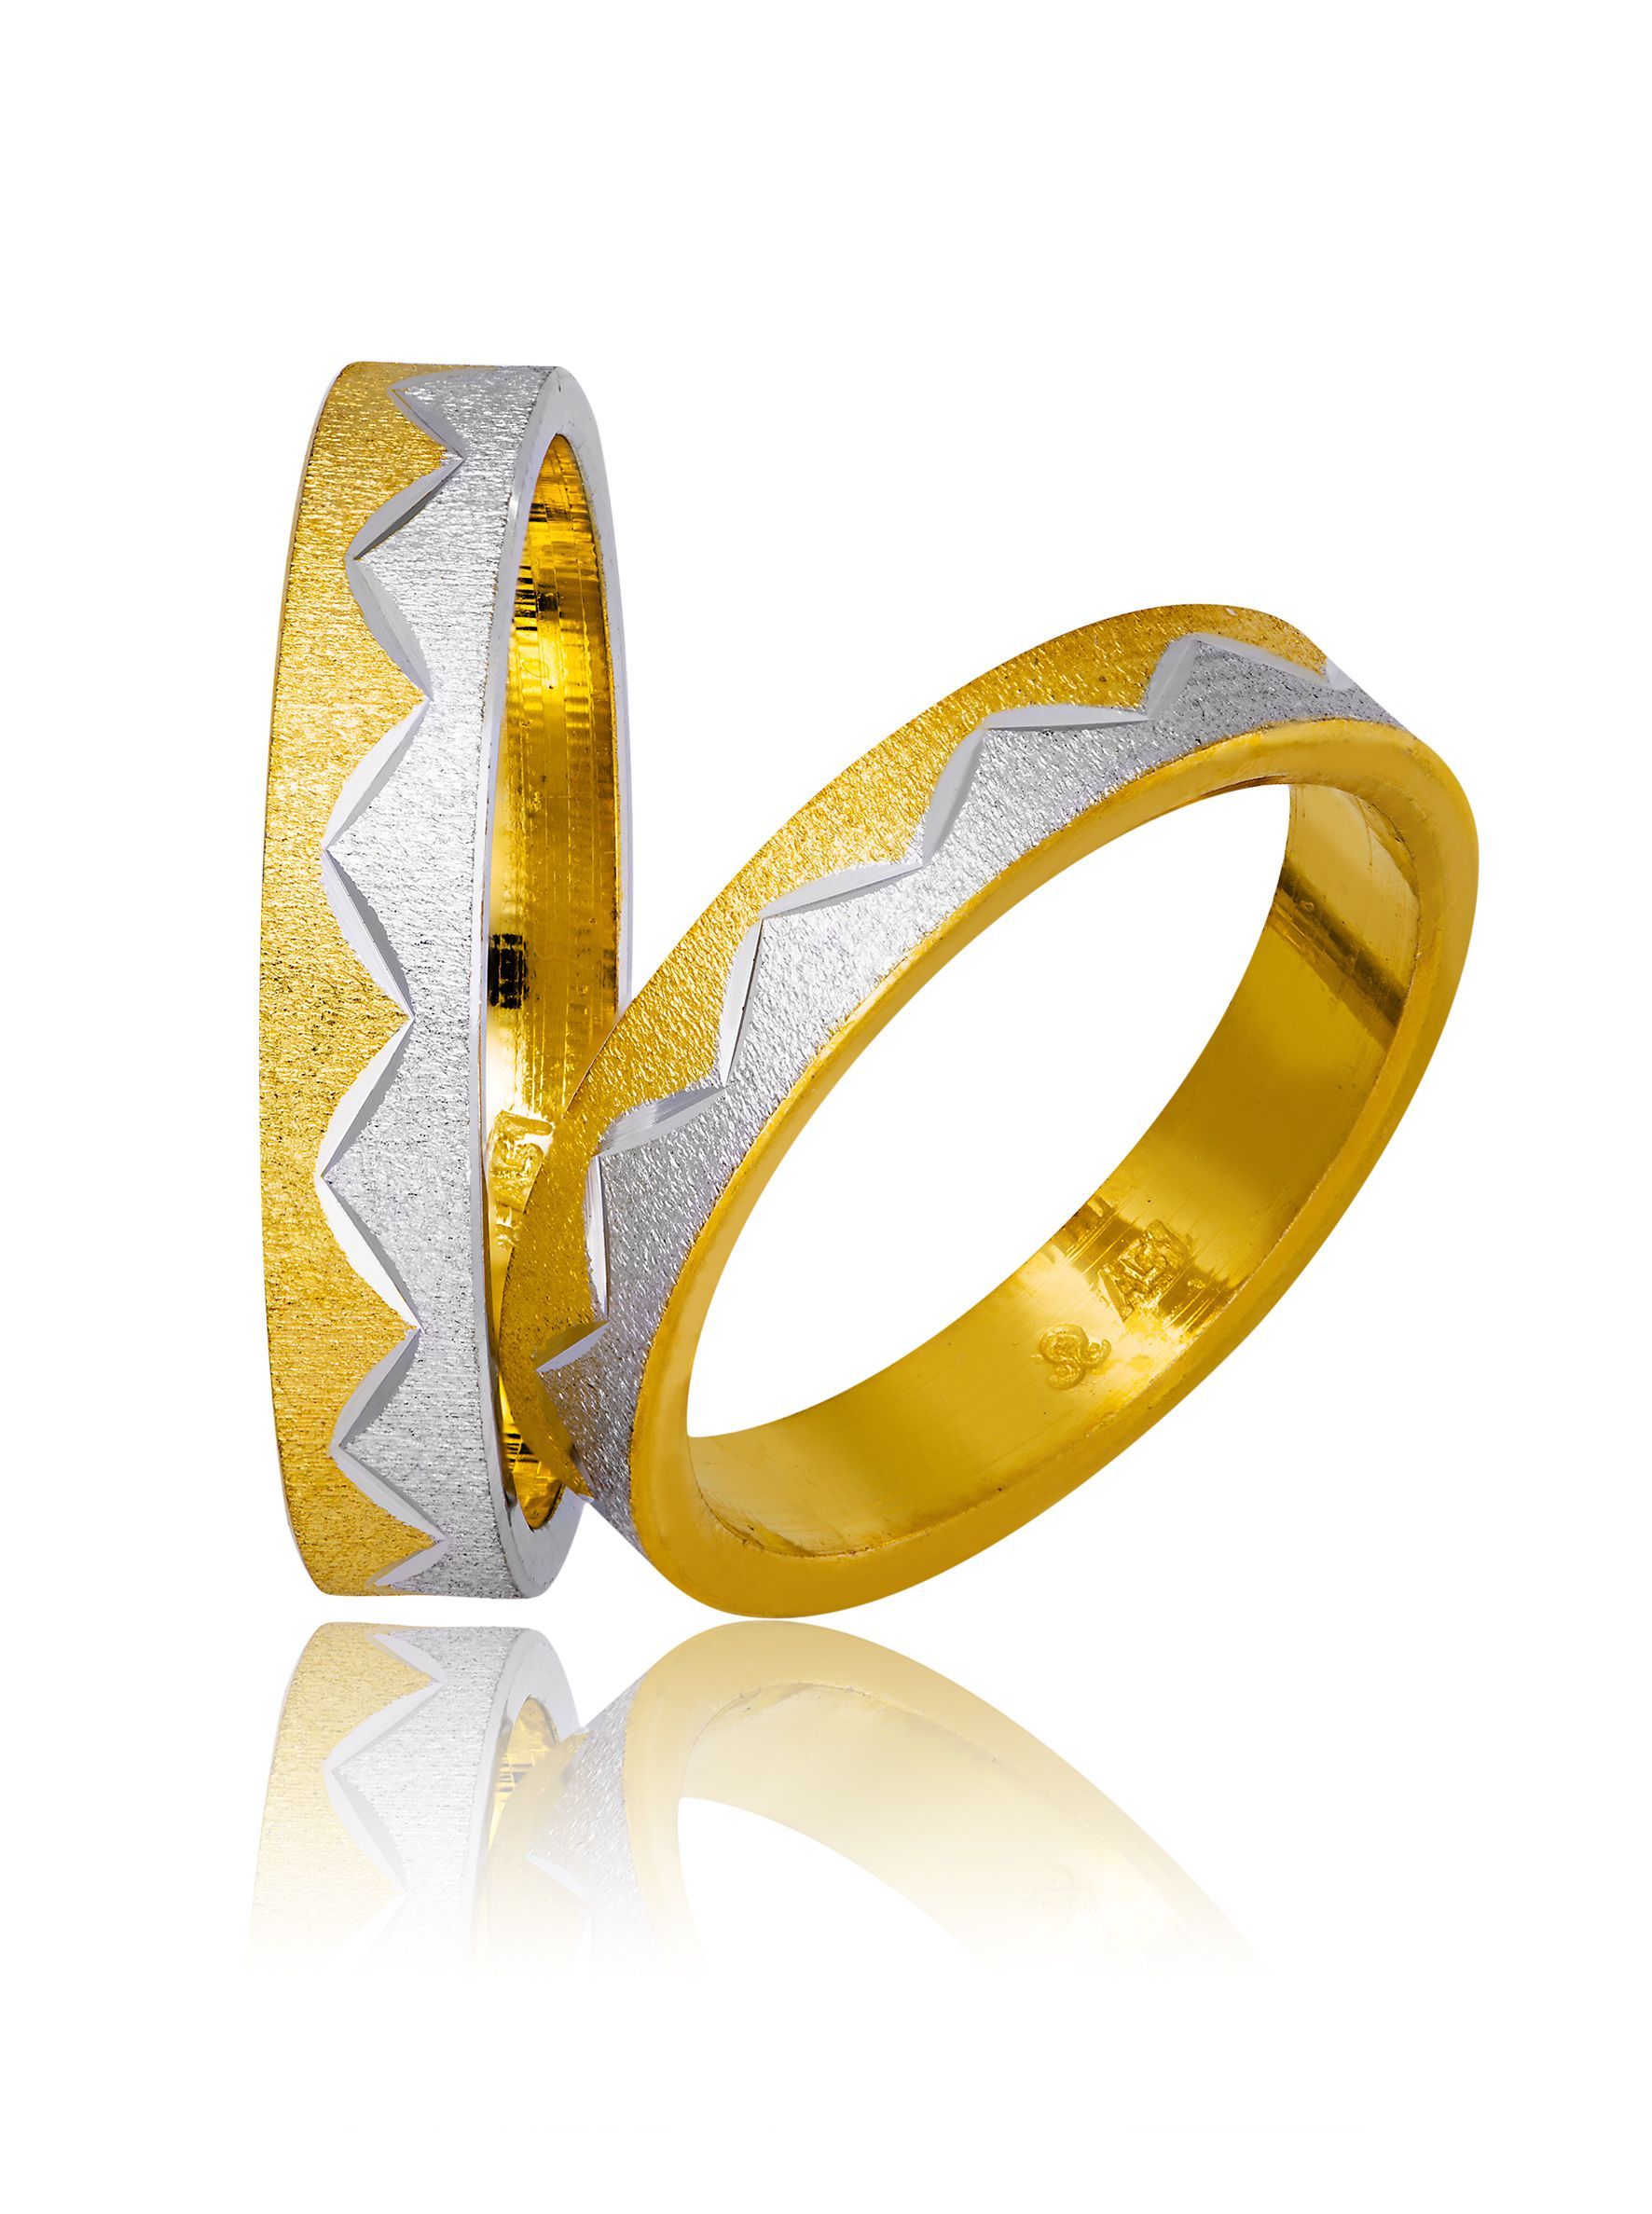 White gold & gold wedding rings 4mm (code 747)